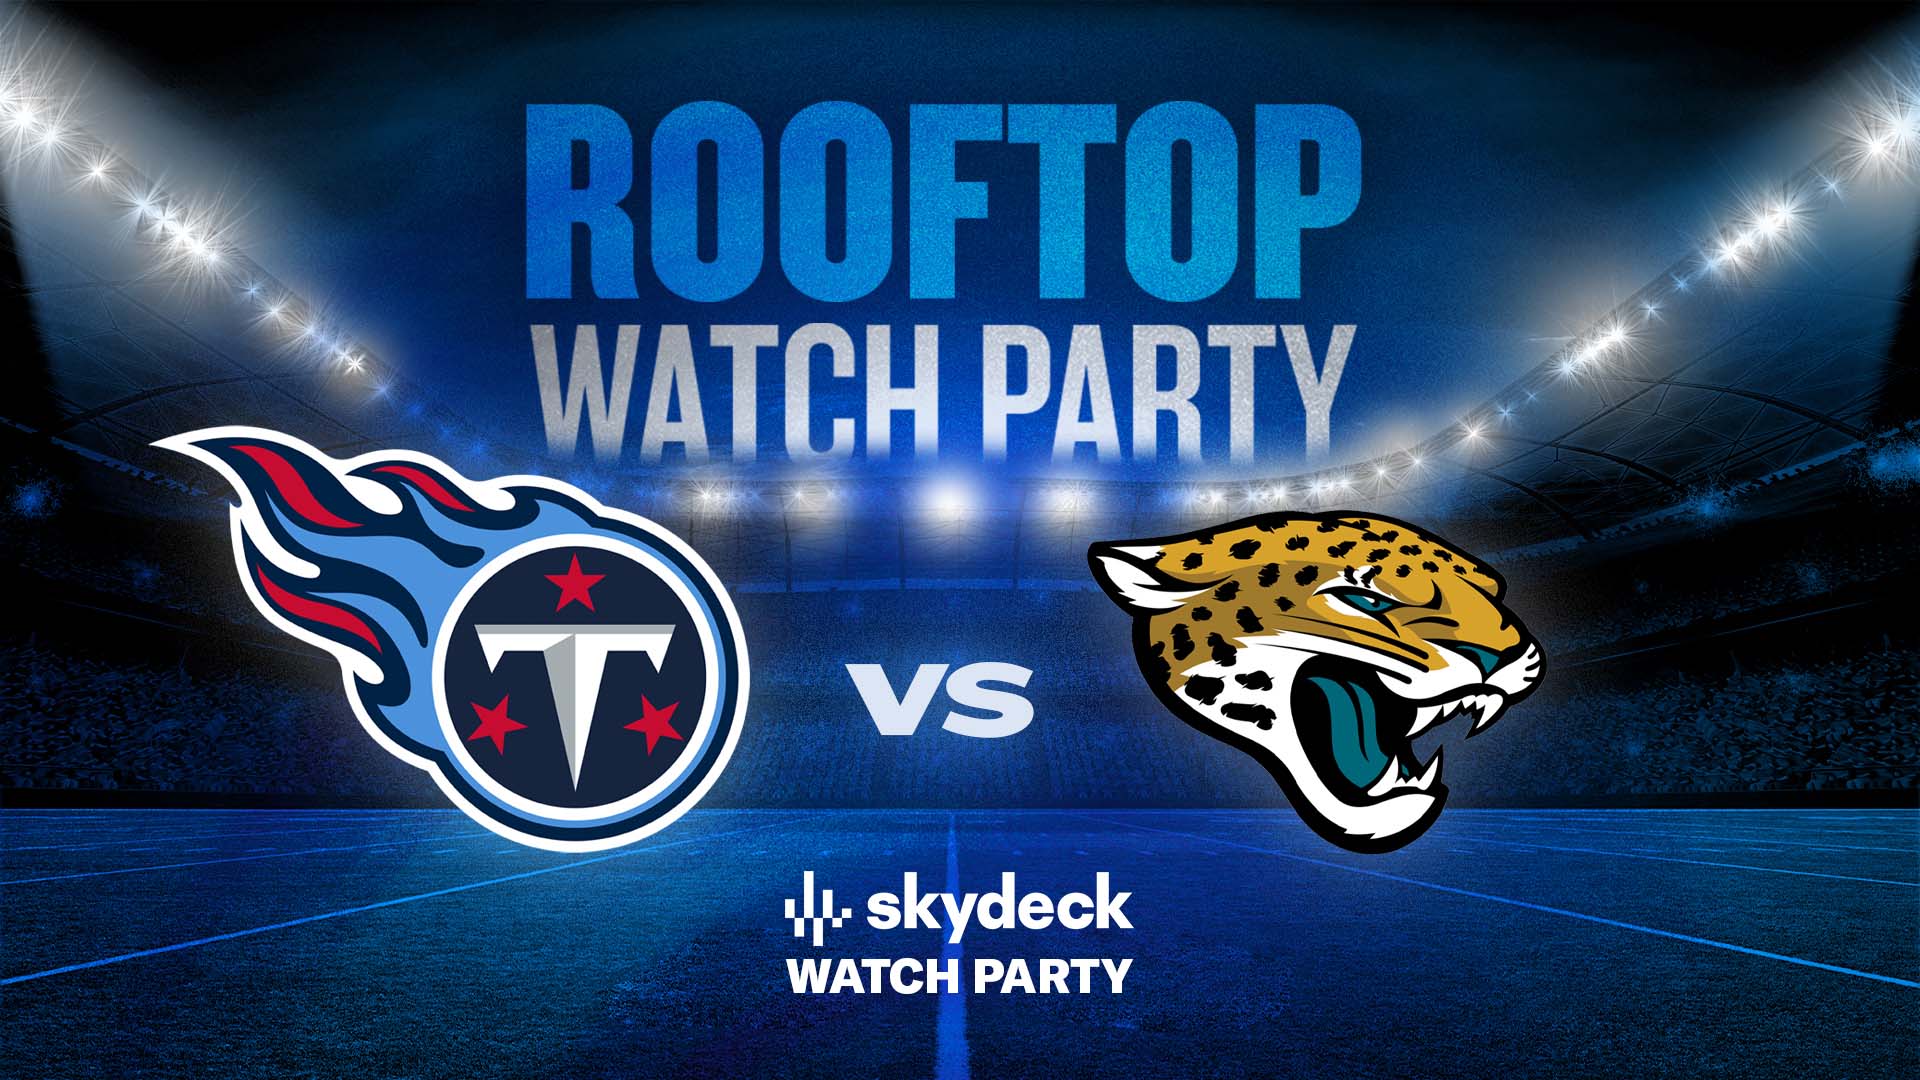 Promo image of Titans vs. Jaguars | Skydeck Watch Party